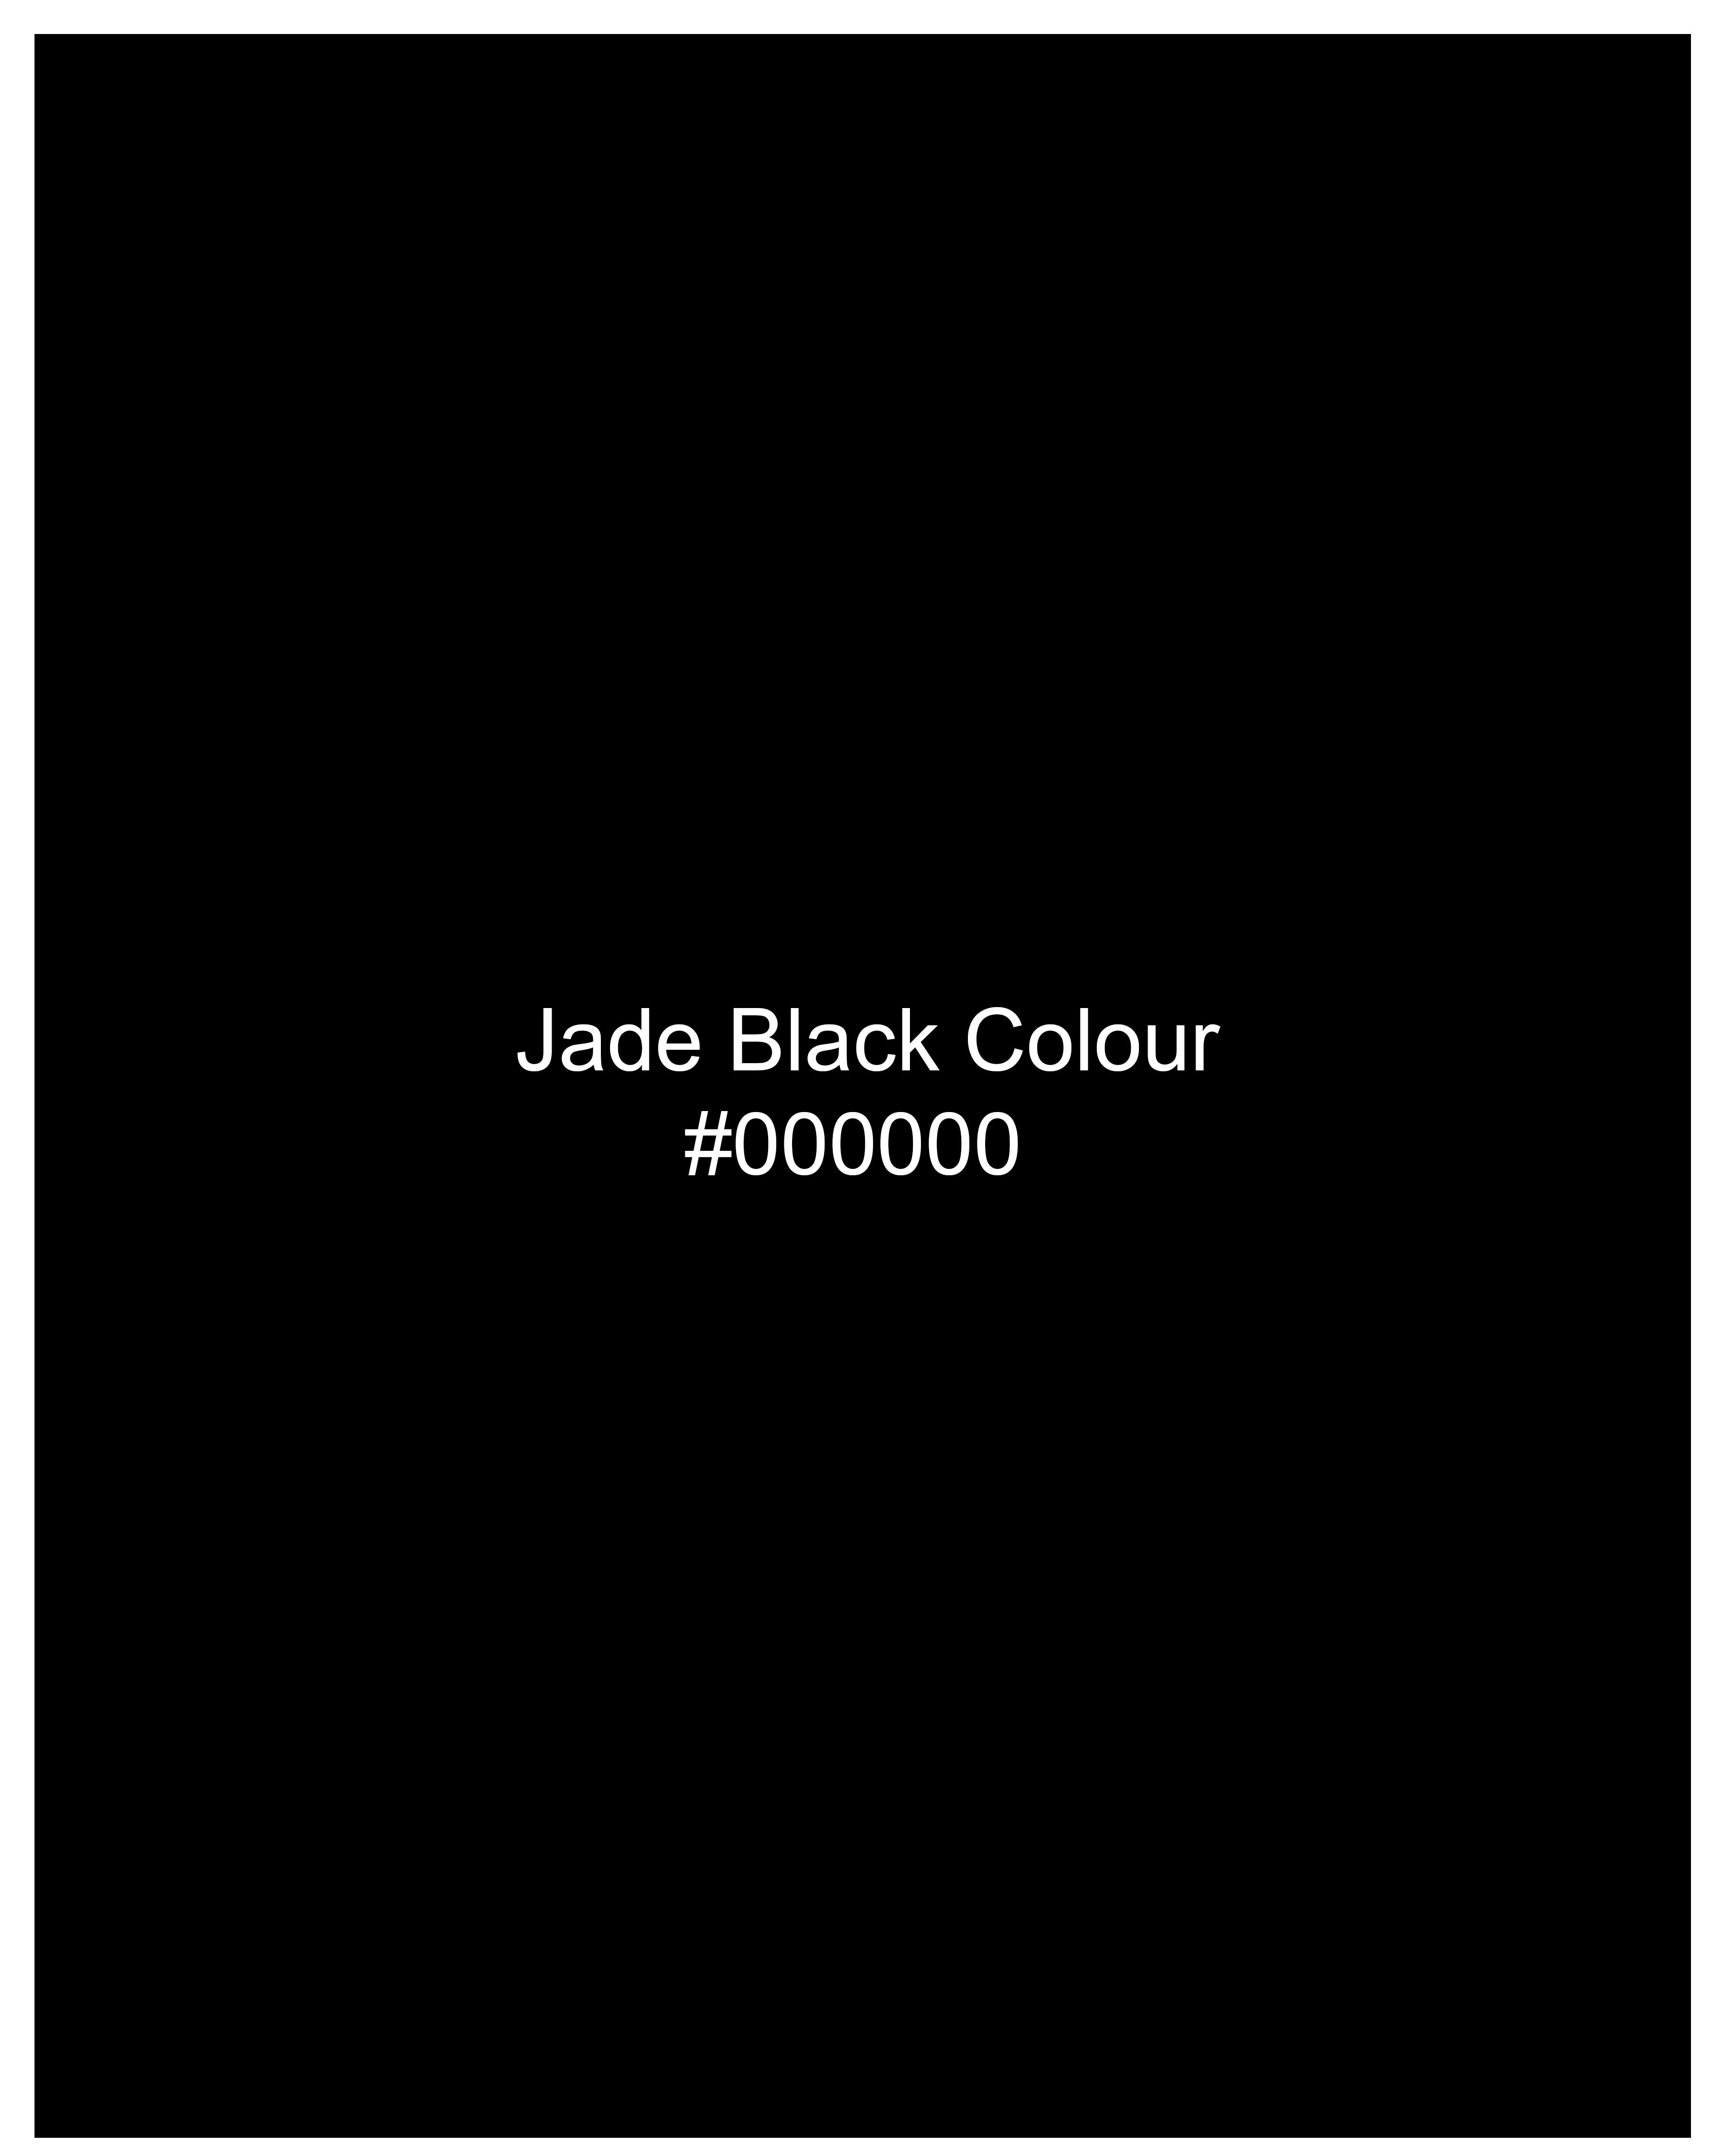 Jade Black Suit